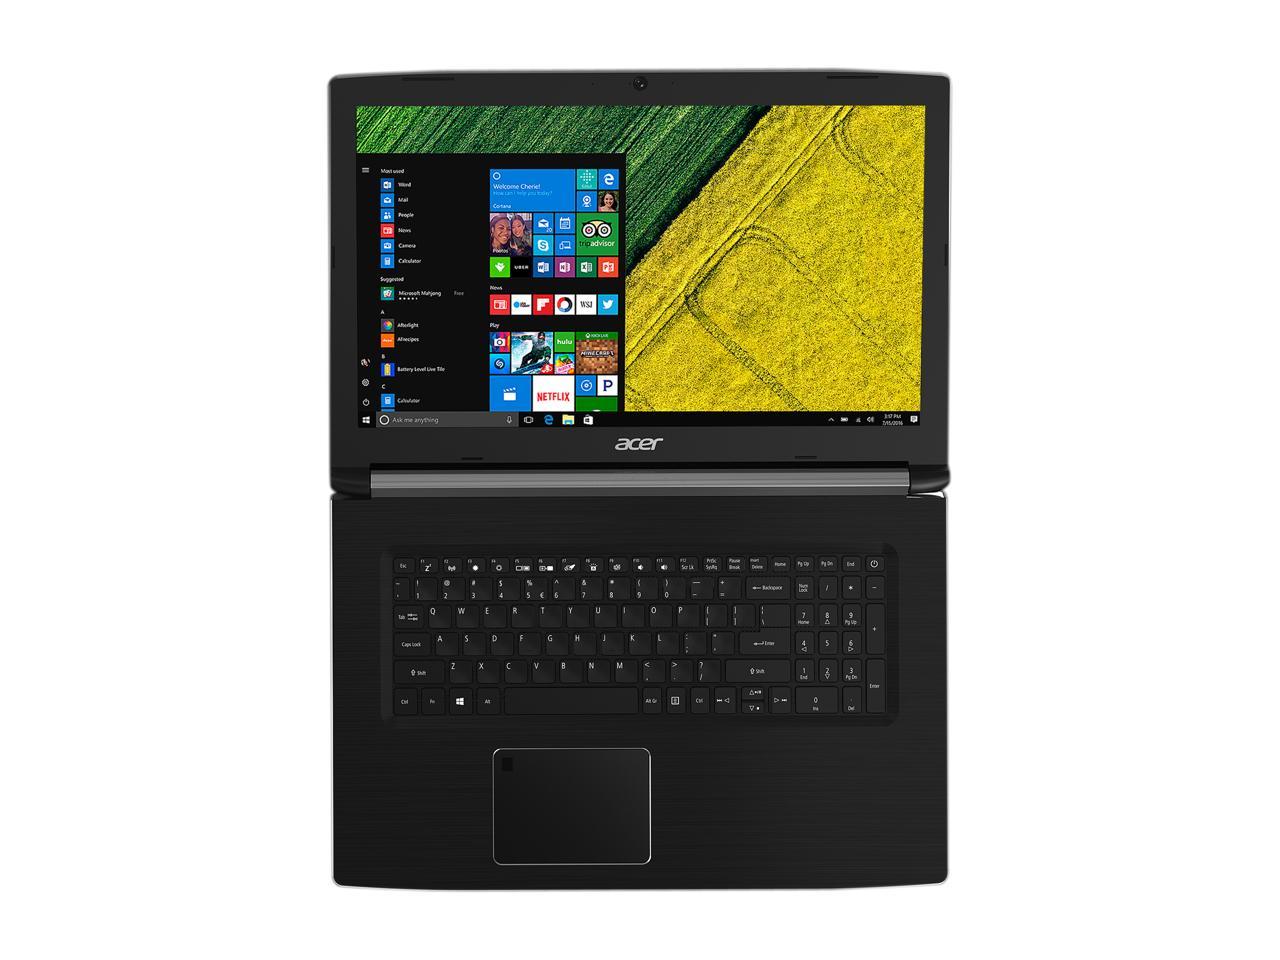 Acer Aspire 7 A717-72G-559X 17.3" FHD, Intel Core i5 8300H (2.30 GHz), NVIDIA GeForce GTX 1050, 8 GB DDR4 Memory, 1 TB HDD, Windows 10 Home